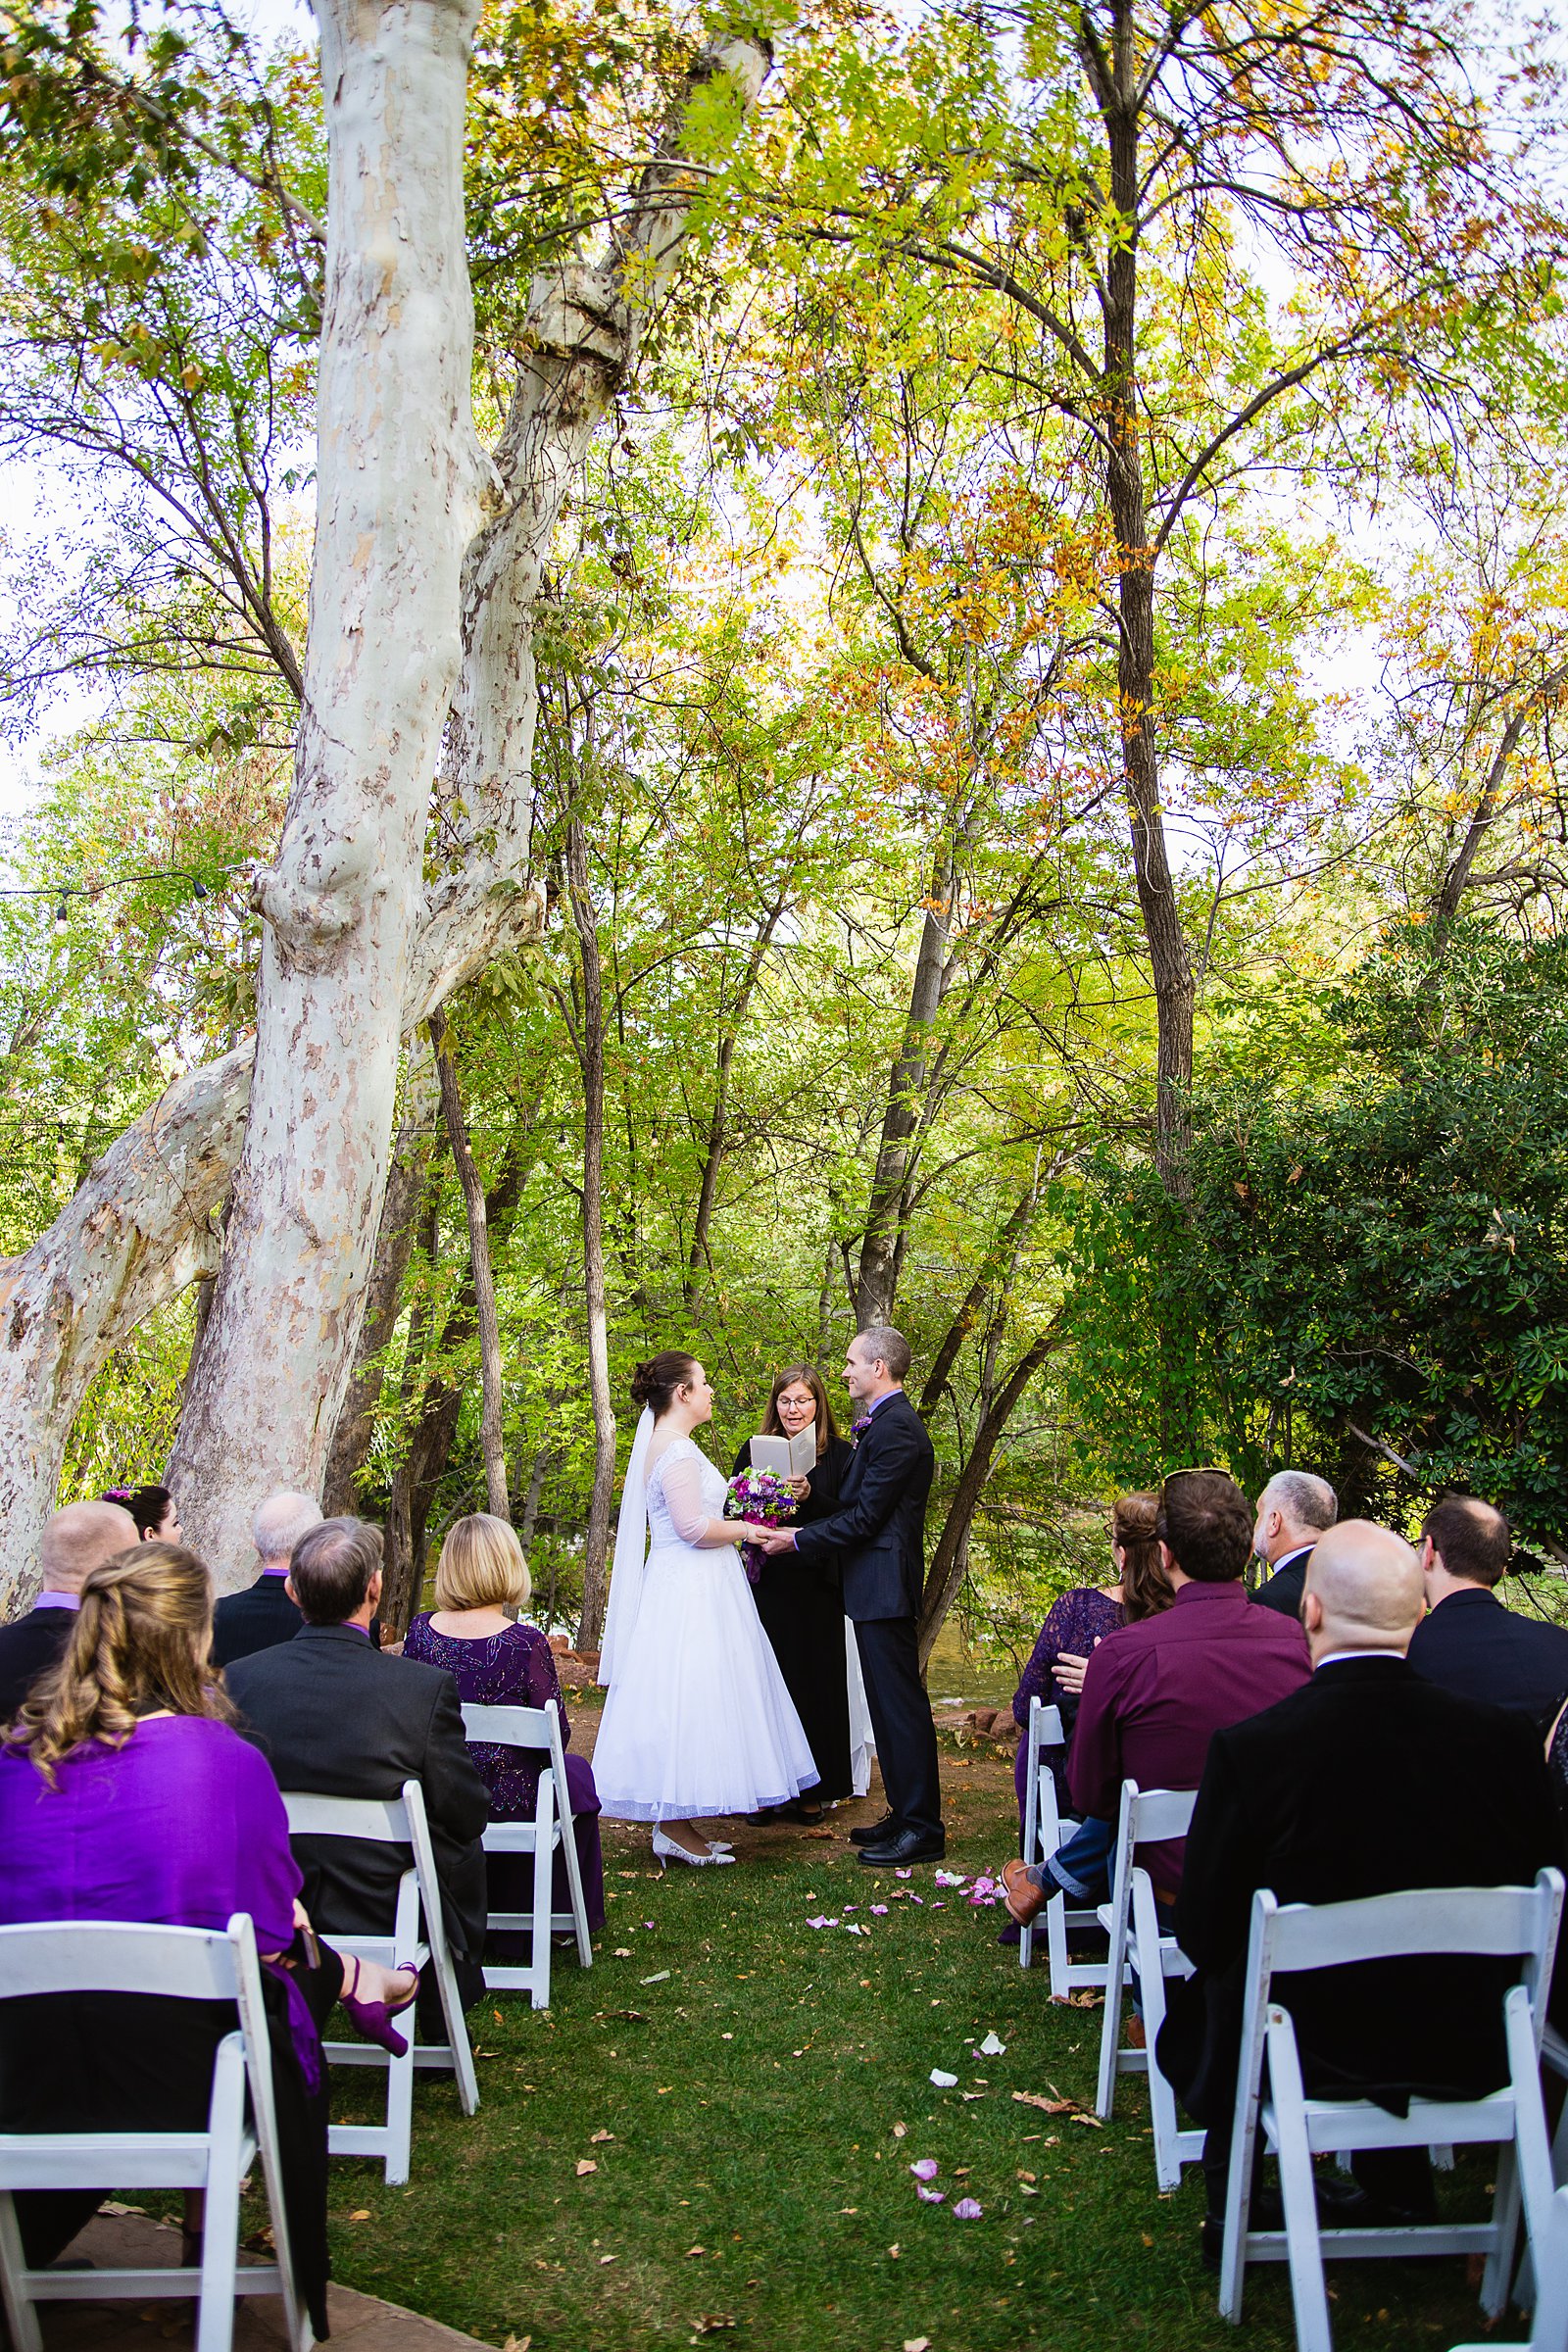 Wedding ceremony at L'Auberge de Sedona by Arizona wedding photographer PMA Photography.